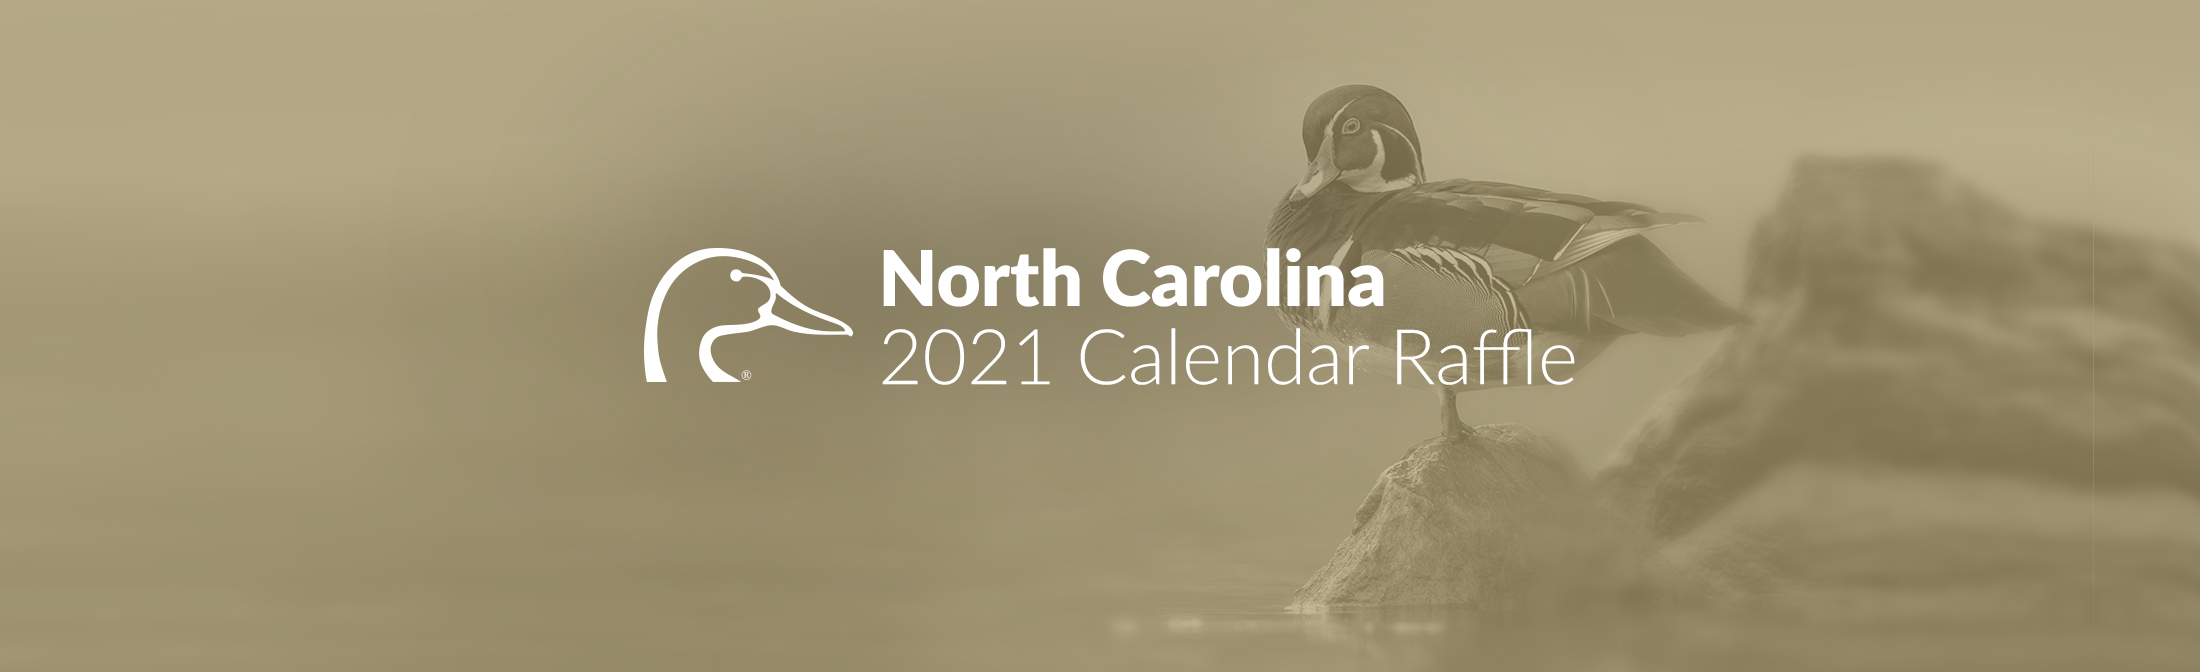 12/23/2021 NCDU Calendar Winner NC Ducks Unlimited